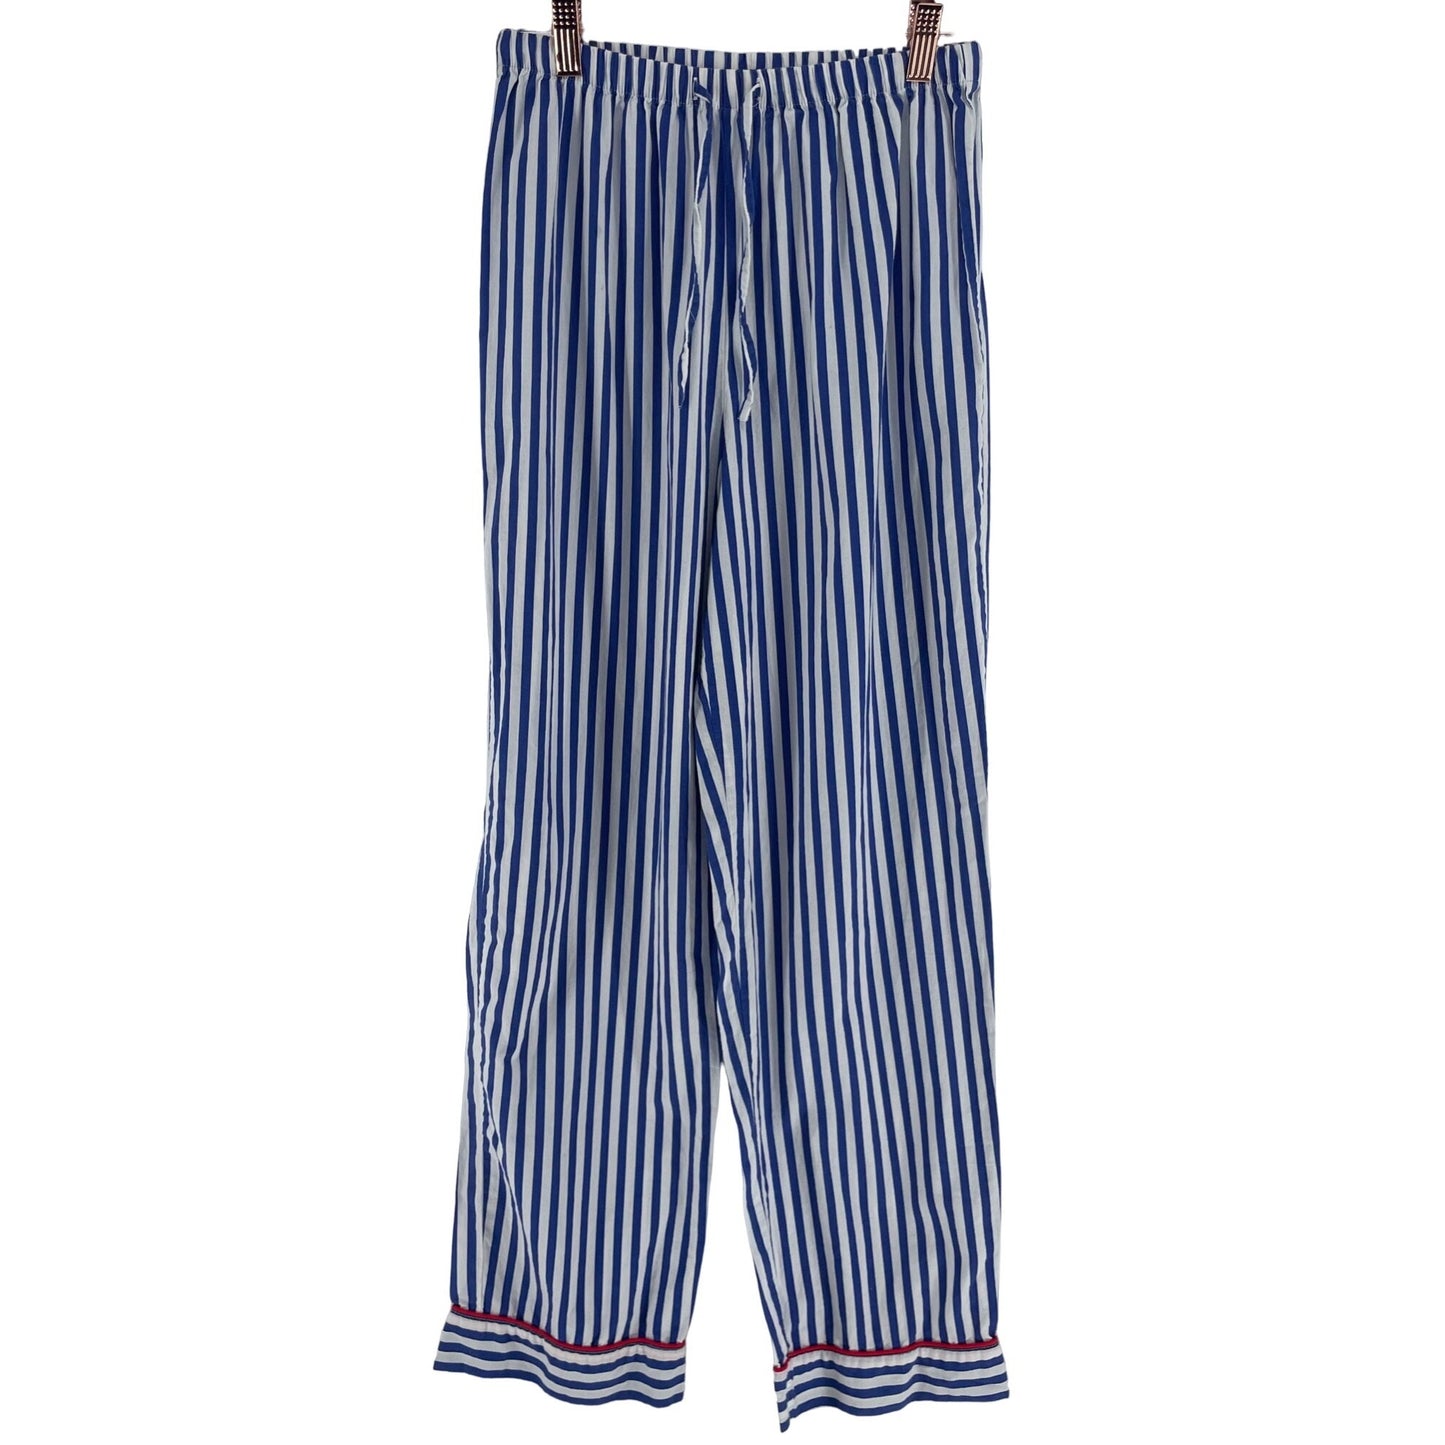 Alexander Del Rossa Women's Size Small Blue & White Striped Pajama Pants